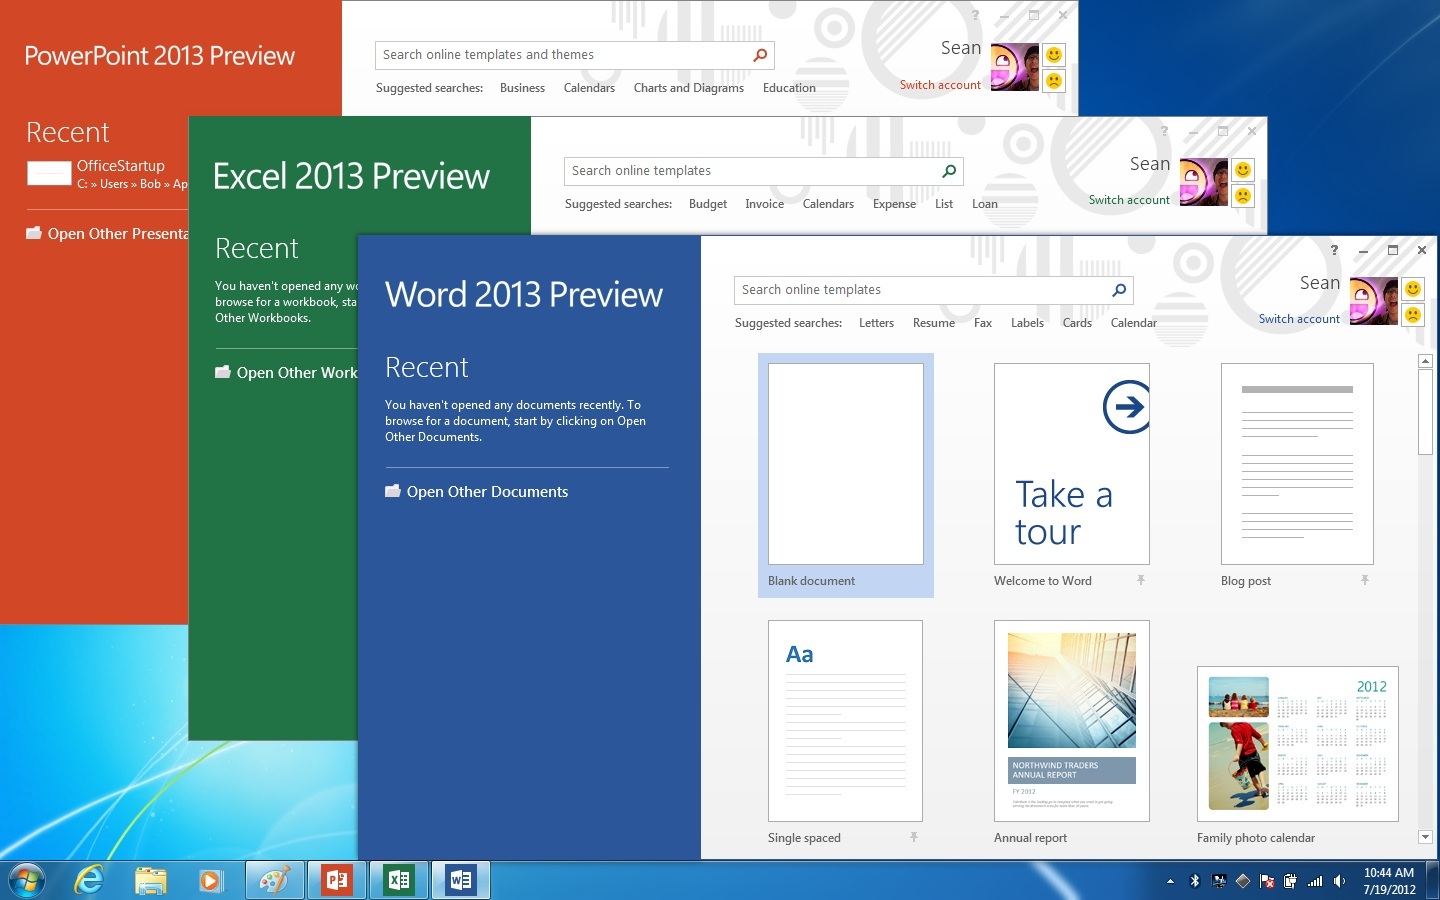 microsoft toolkit windows 8 and office 2013 activator piratebay